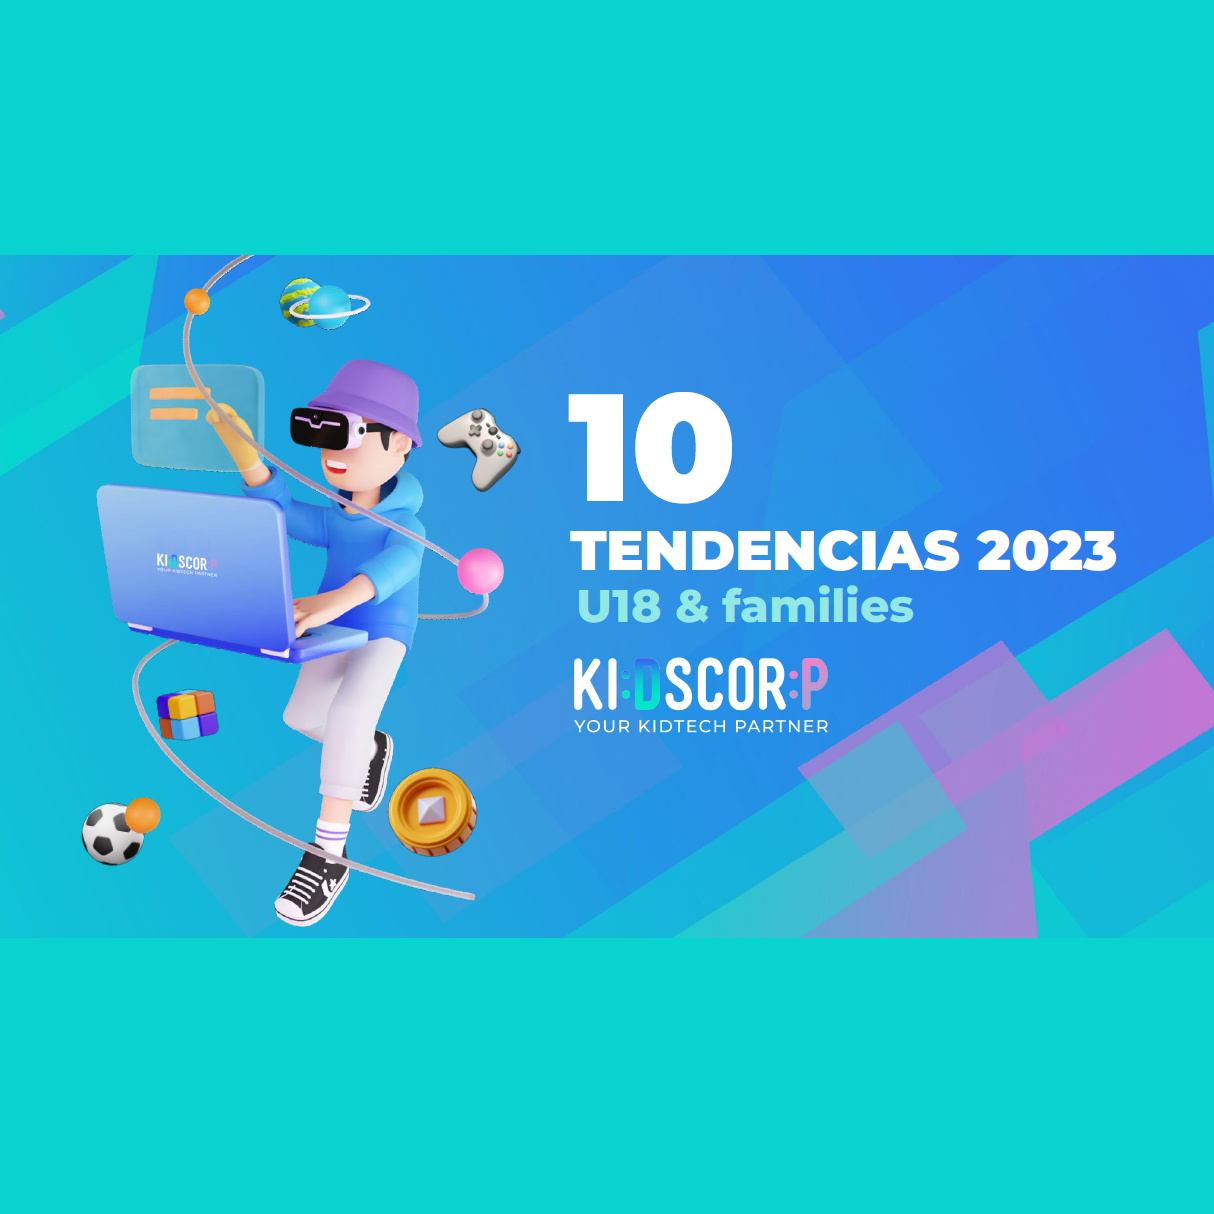 10 Tendencias 2023 U18 & families